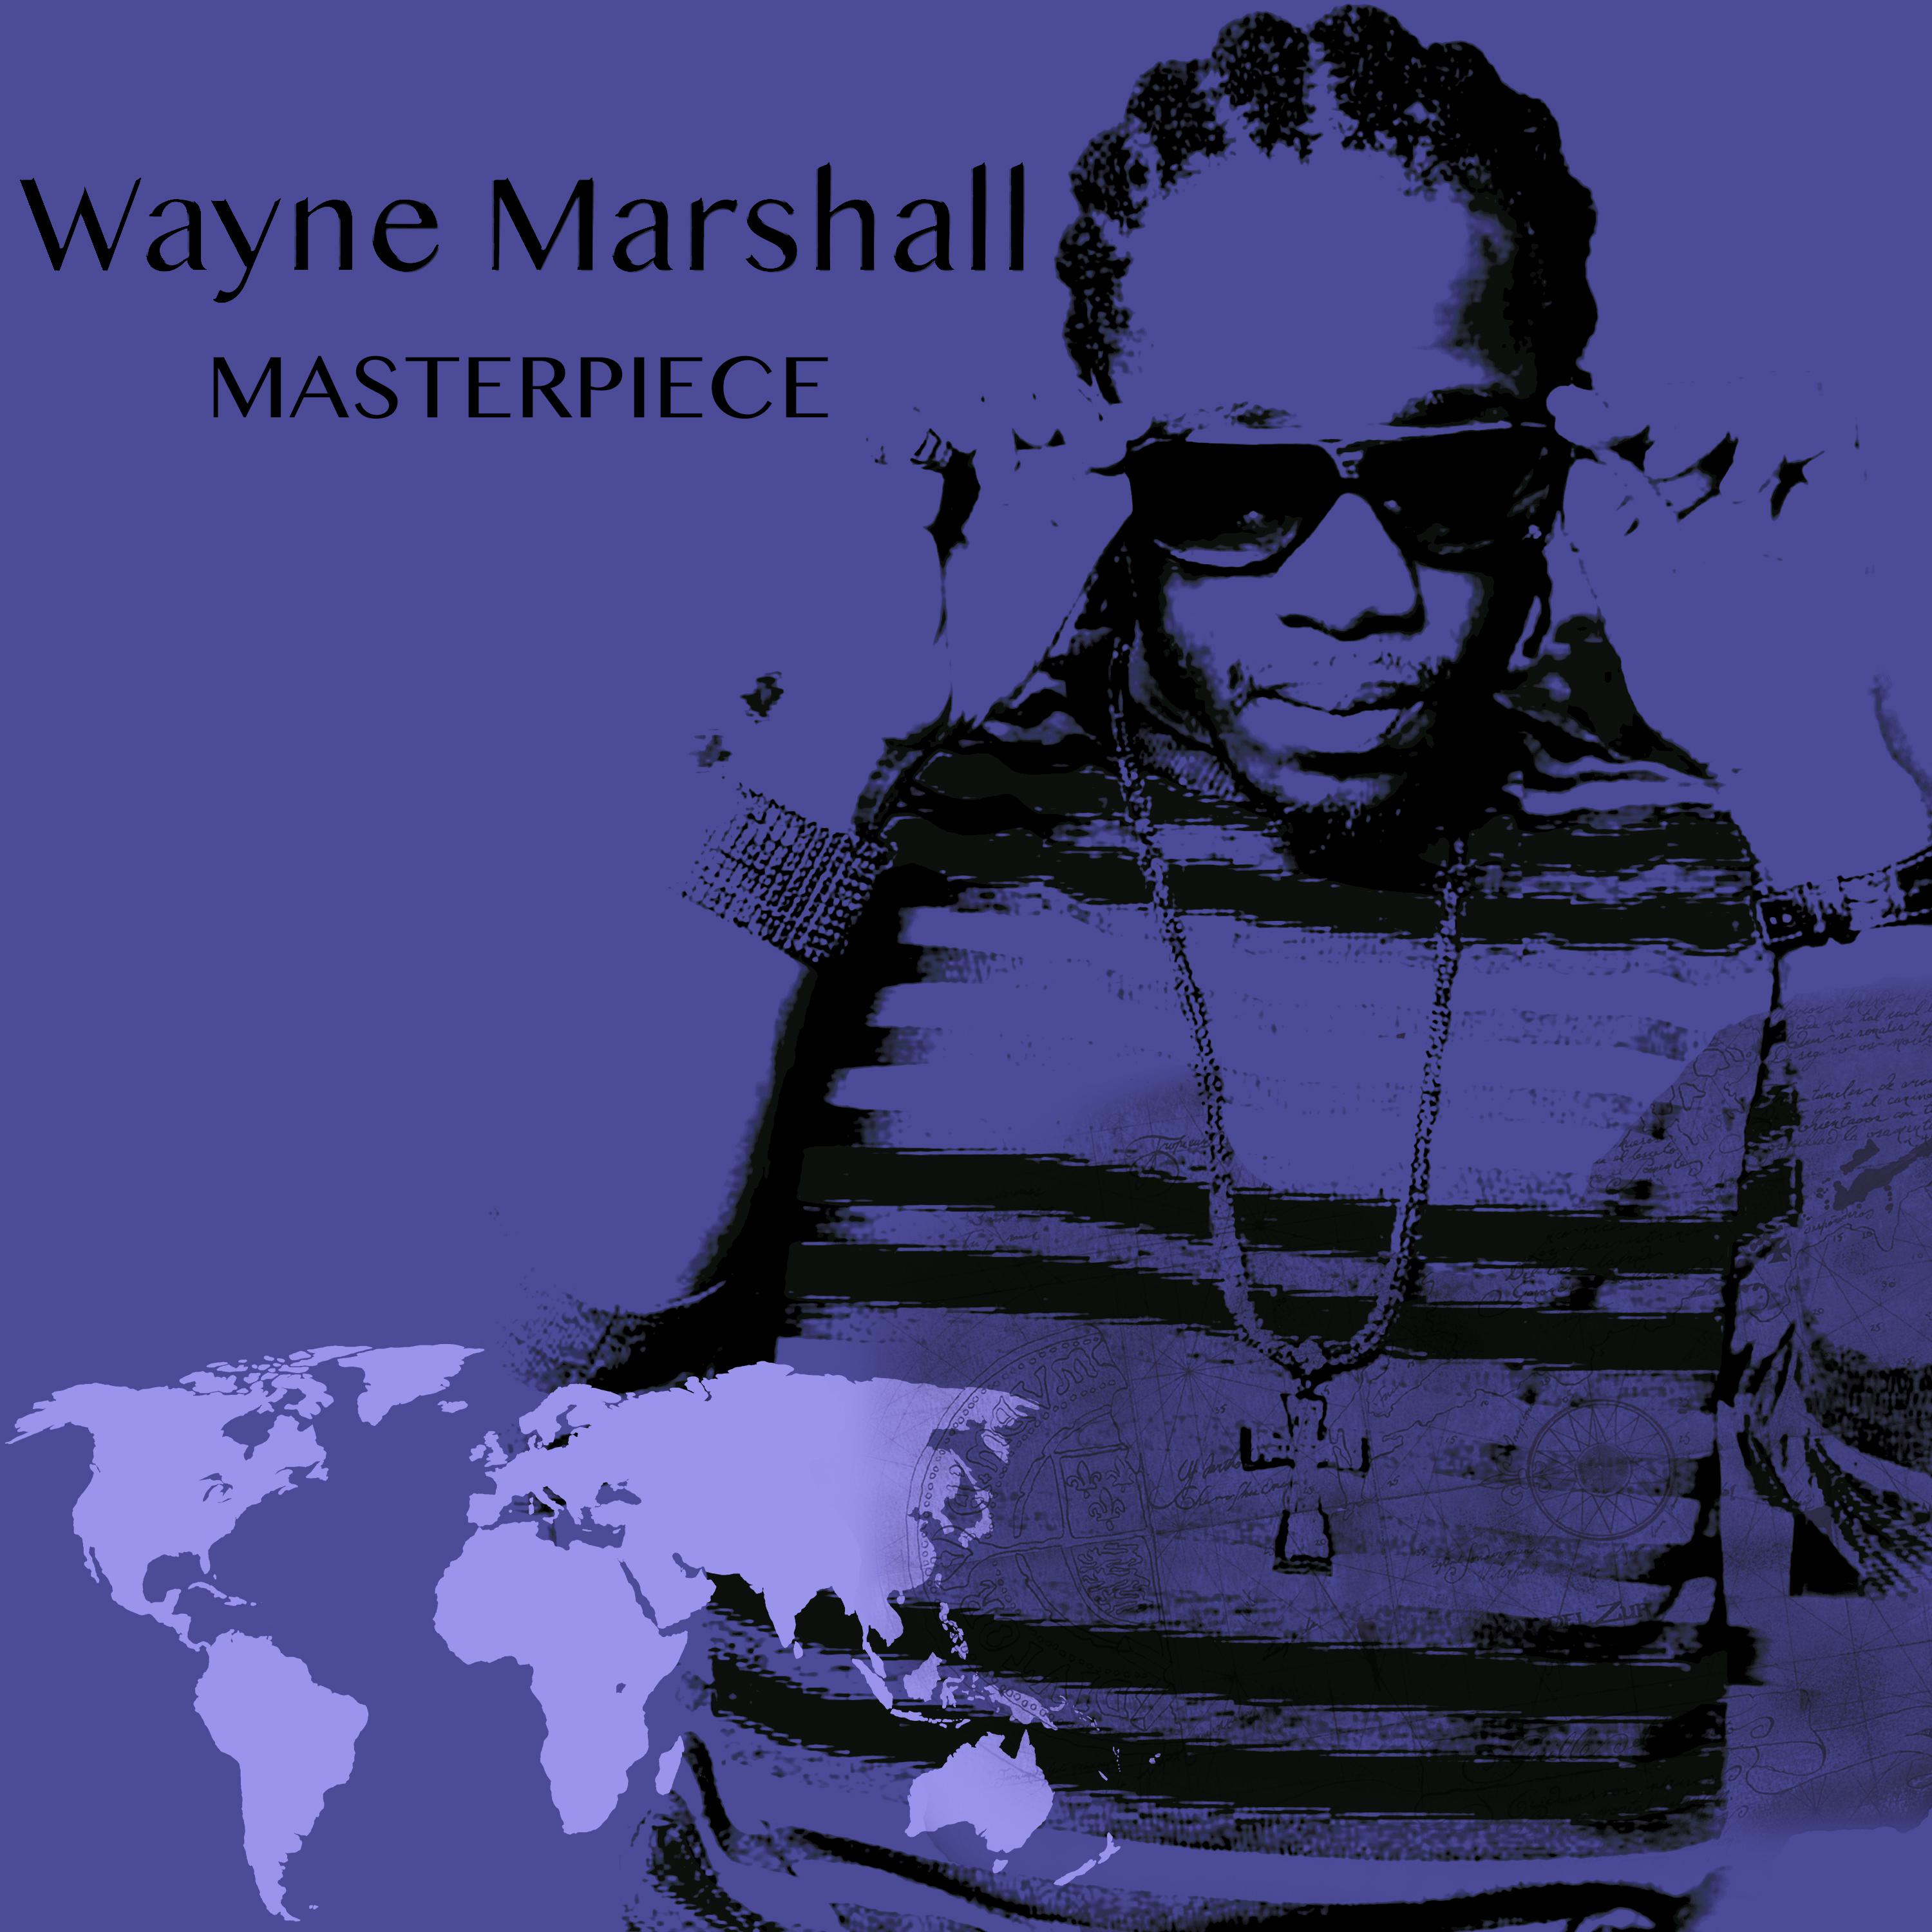 Wayne Marshall Masterpiece